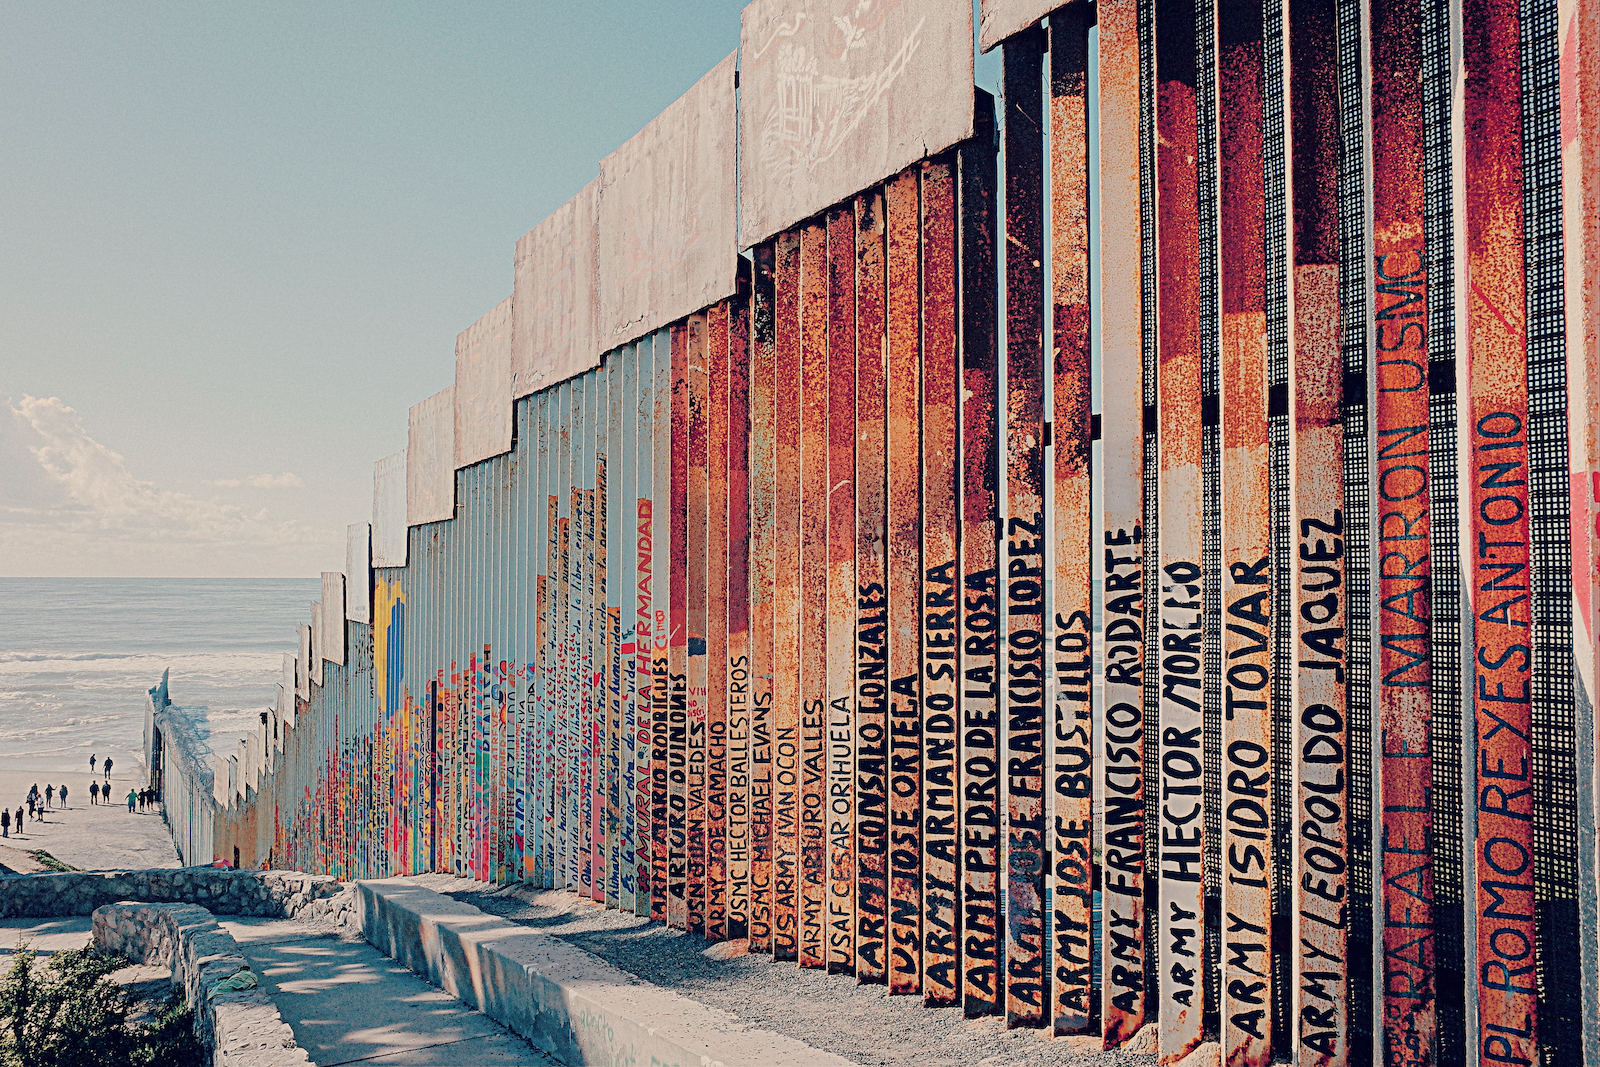 Border fence along U.S.-Mexico border